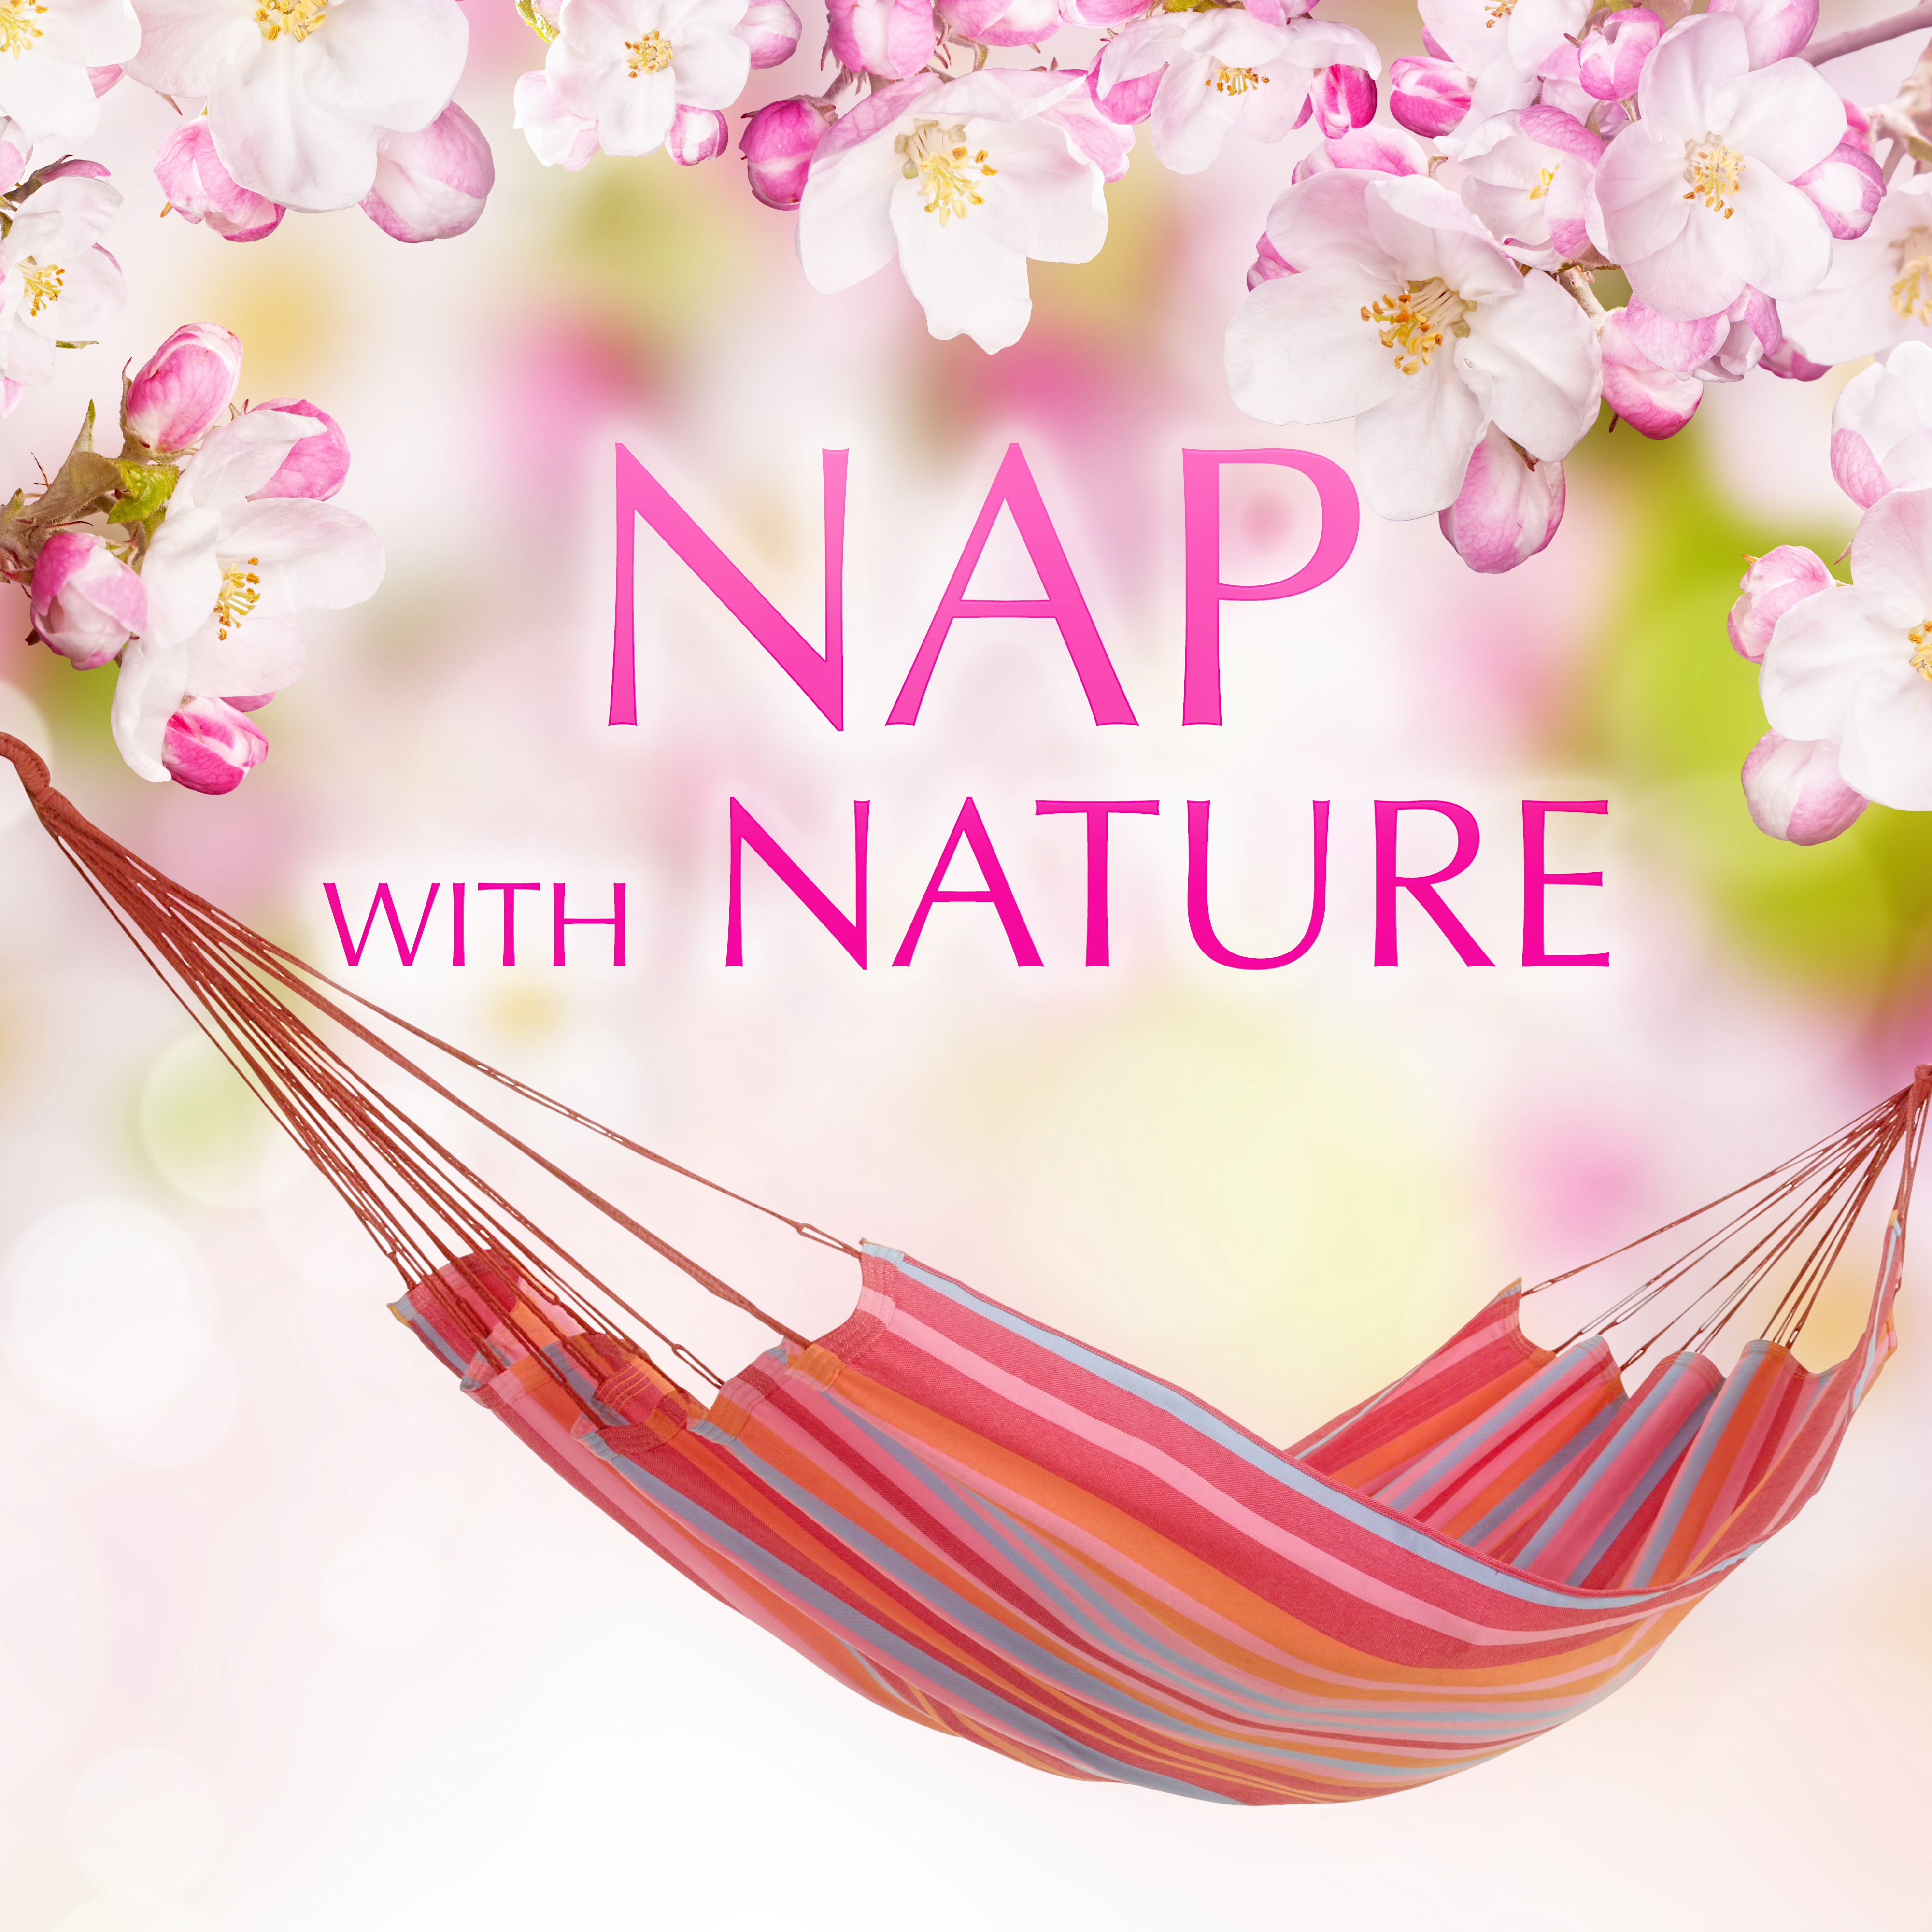 Nap with Nature – Little Sleep, Dreaming, Deep Sleep, Inner Peace, Sleepy Eyes, Soothing Star, Rain, Sea, Ocean Waves, Crickets